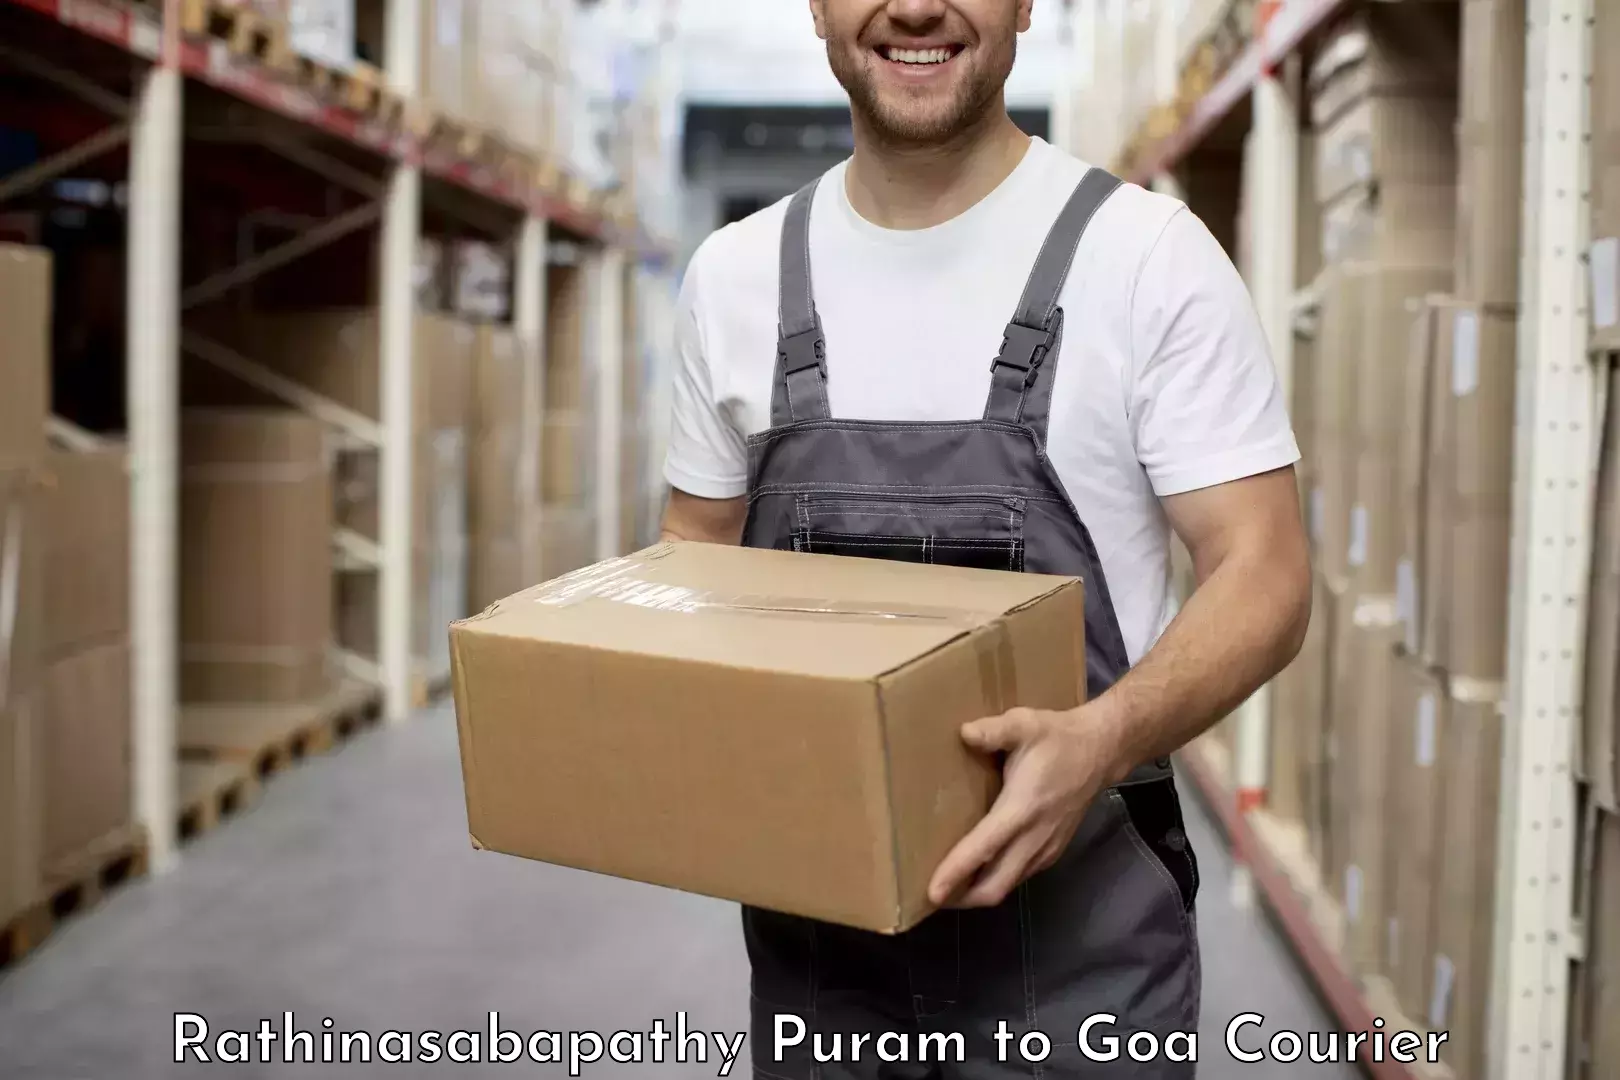 Reliable delivery network Rathinasabapathy Puram to Panaji